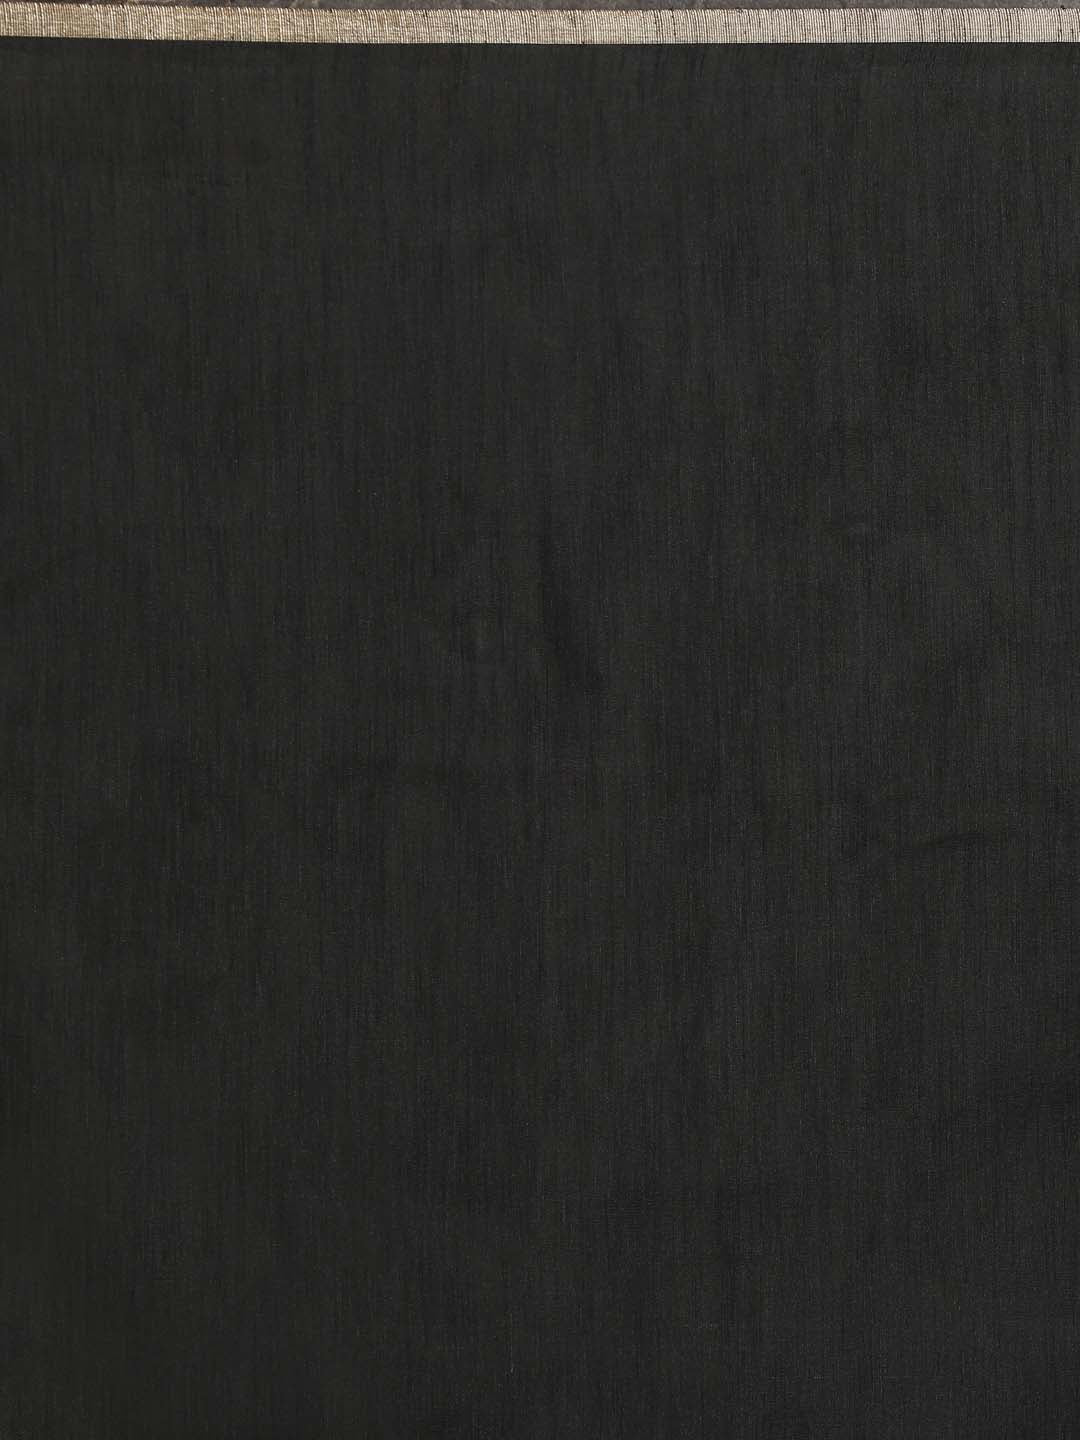 Indethnic Banarasi Black Solid Daily Wear Saree - Saree Detail View